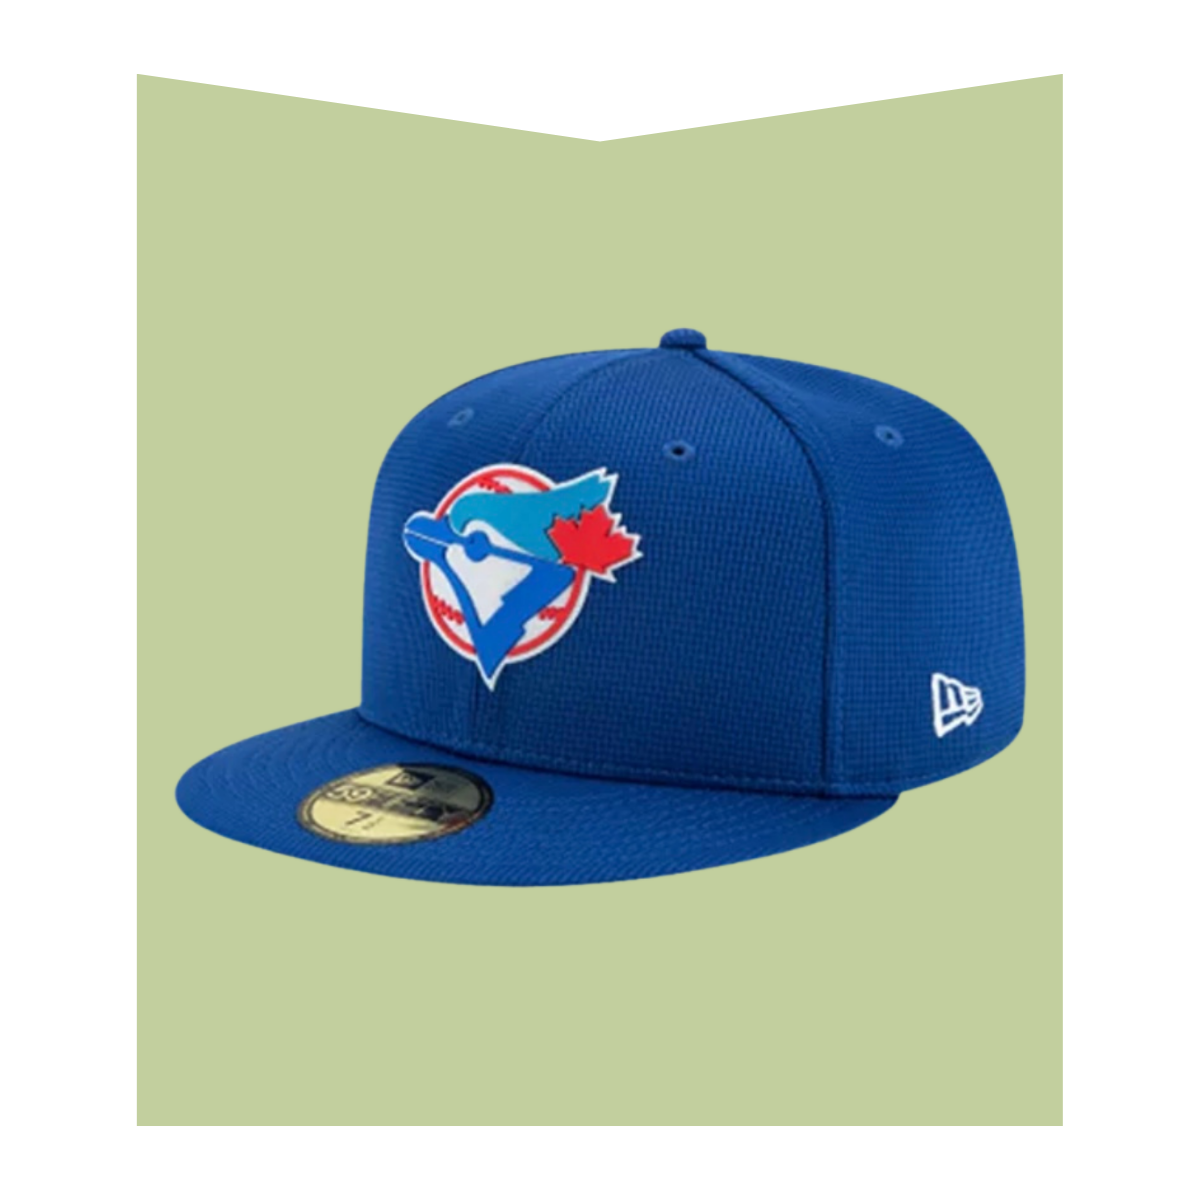 Blue Jays Hats from SportChek